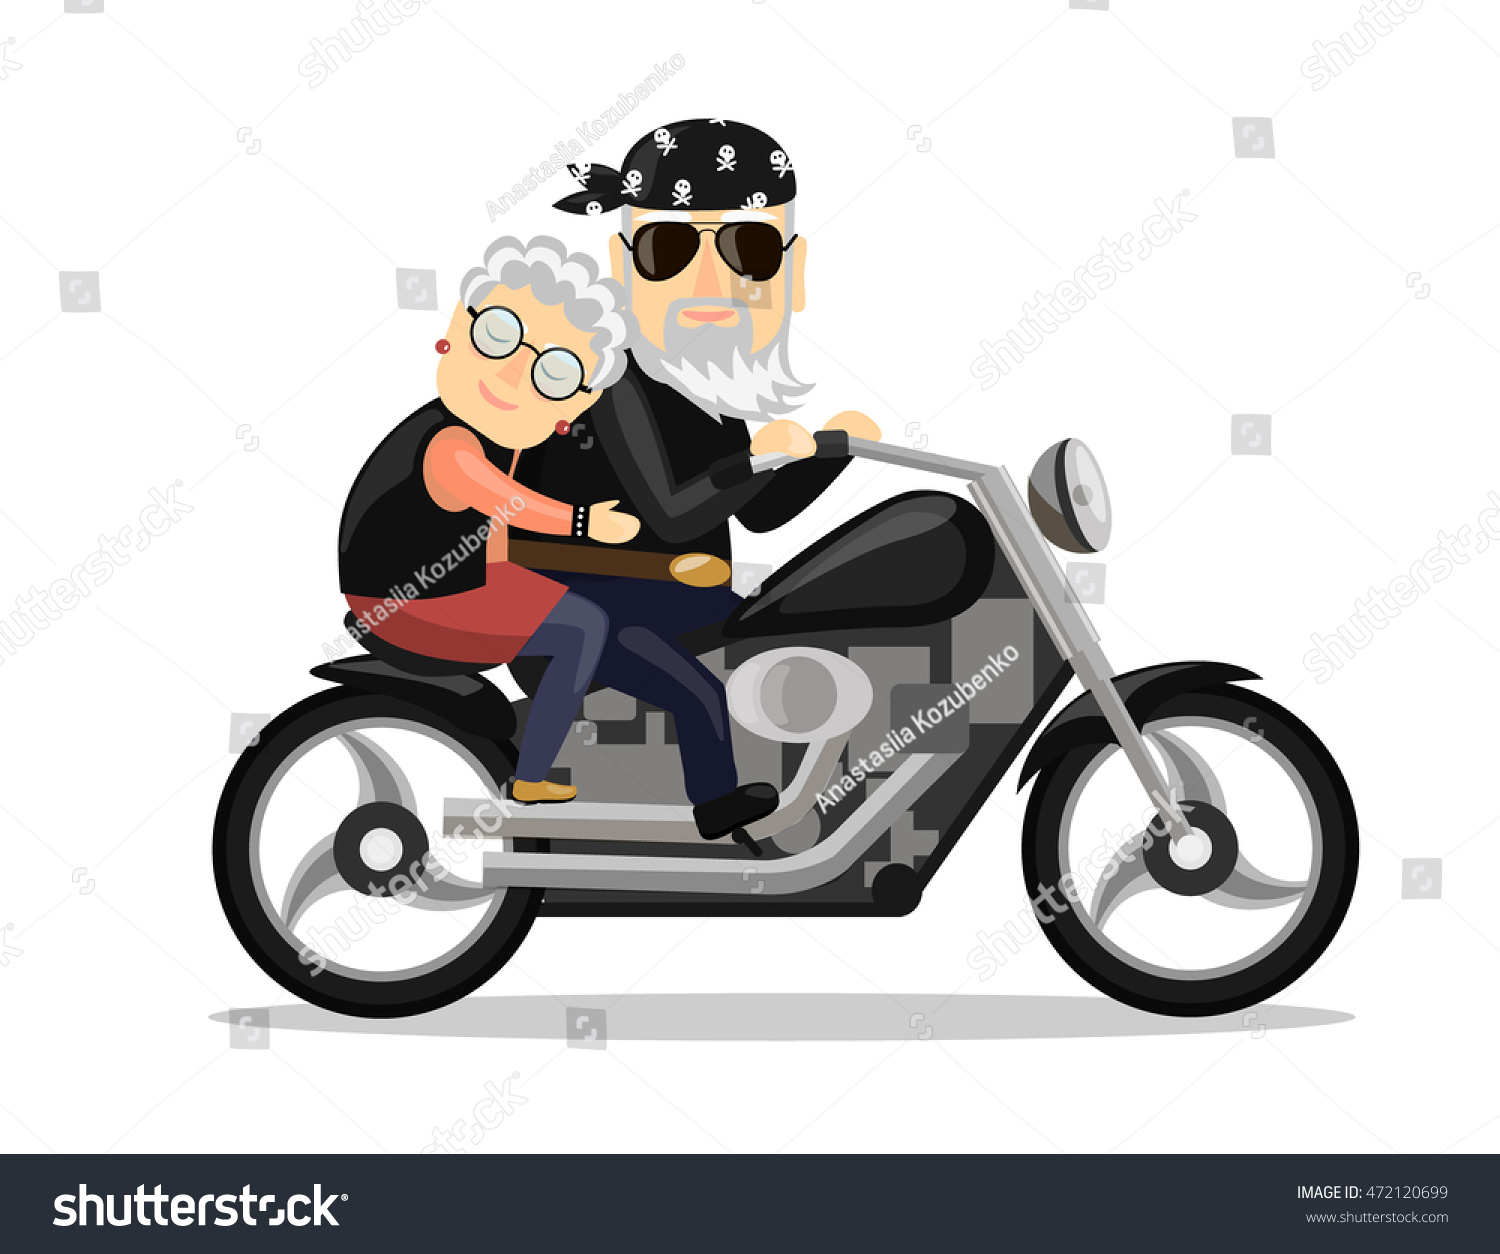 Дед с бабкой на мотоцикле